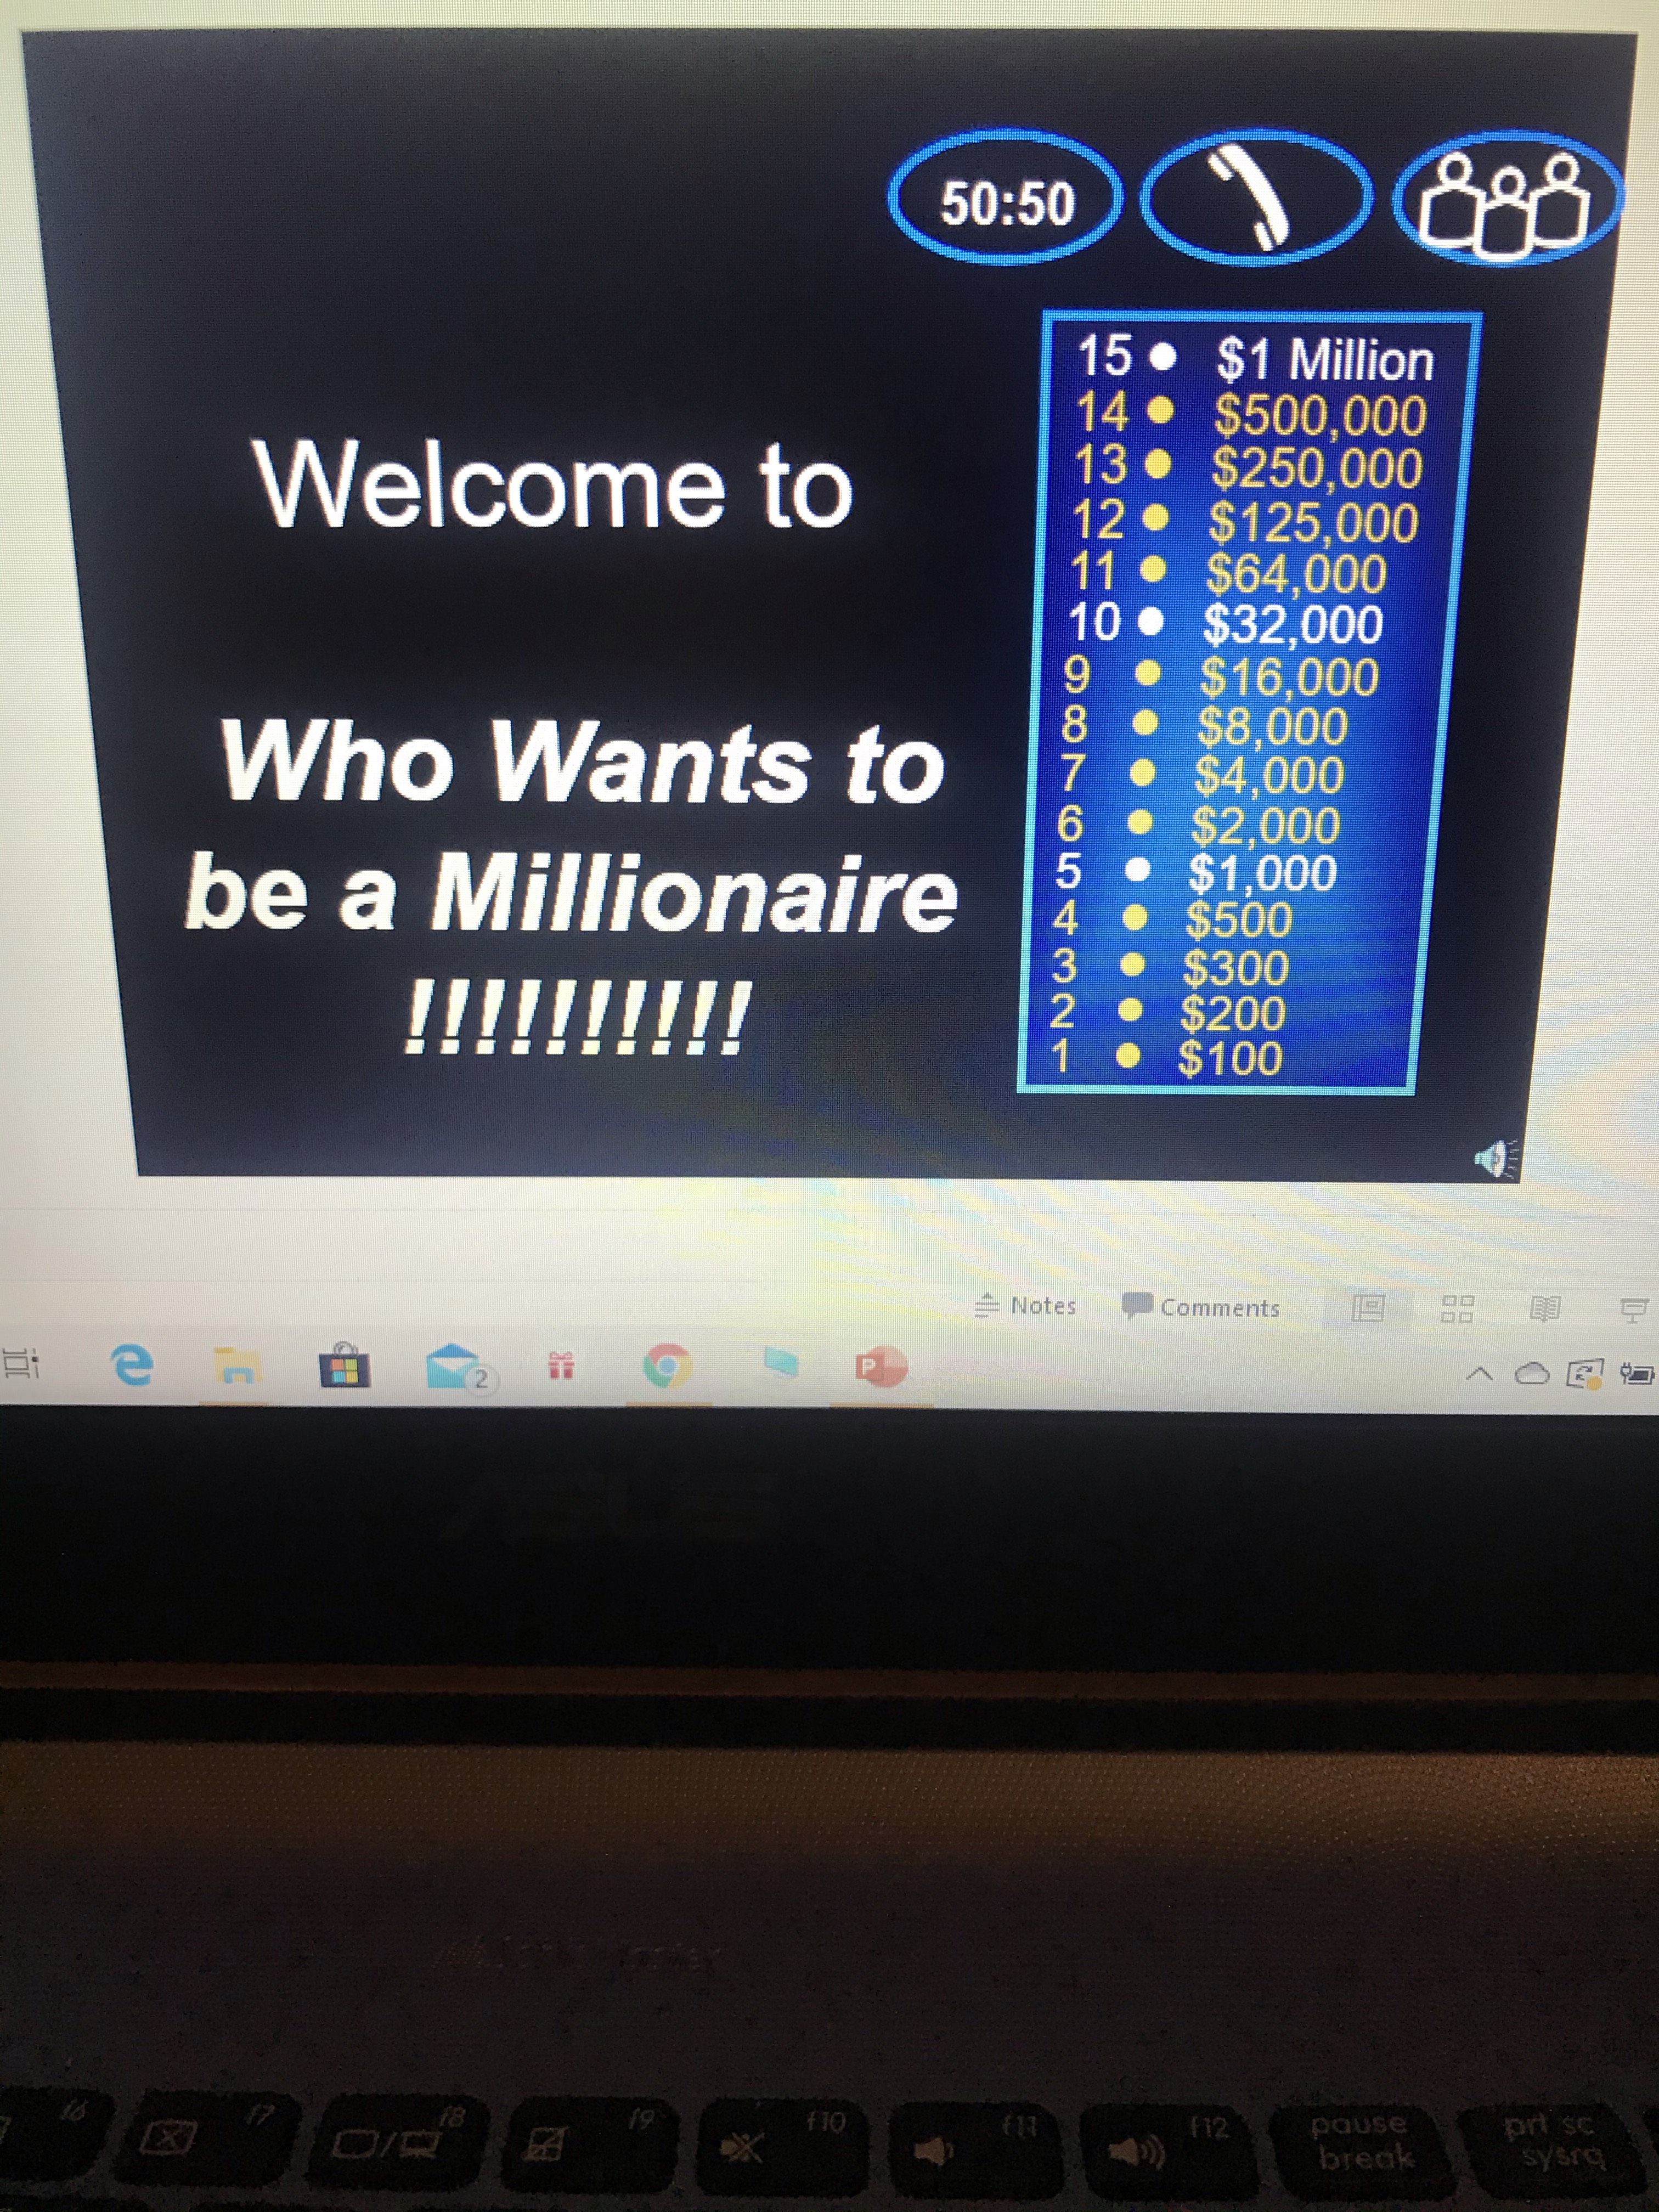 Kim Milyoner Olmak İster?Who wants to be a Milloinare?İNGİLİZCE ETKİNL